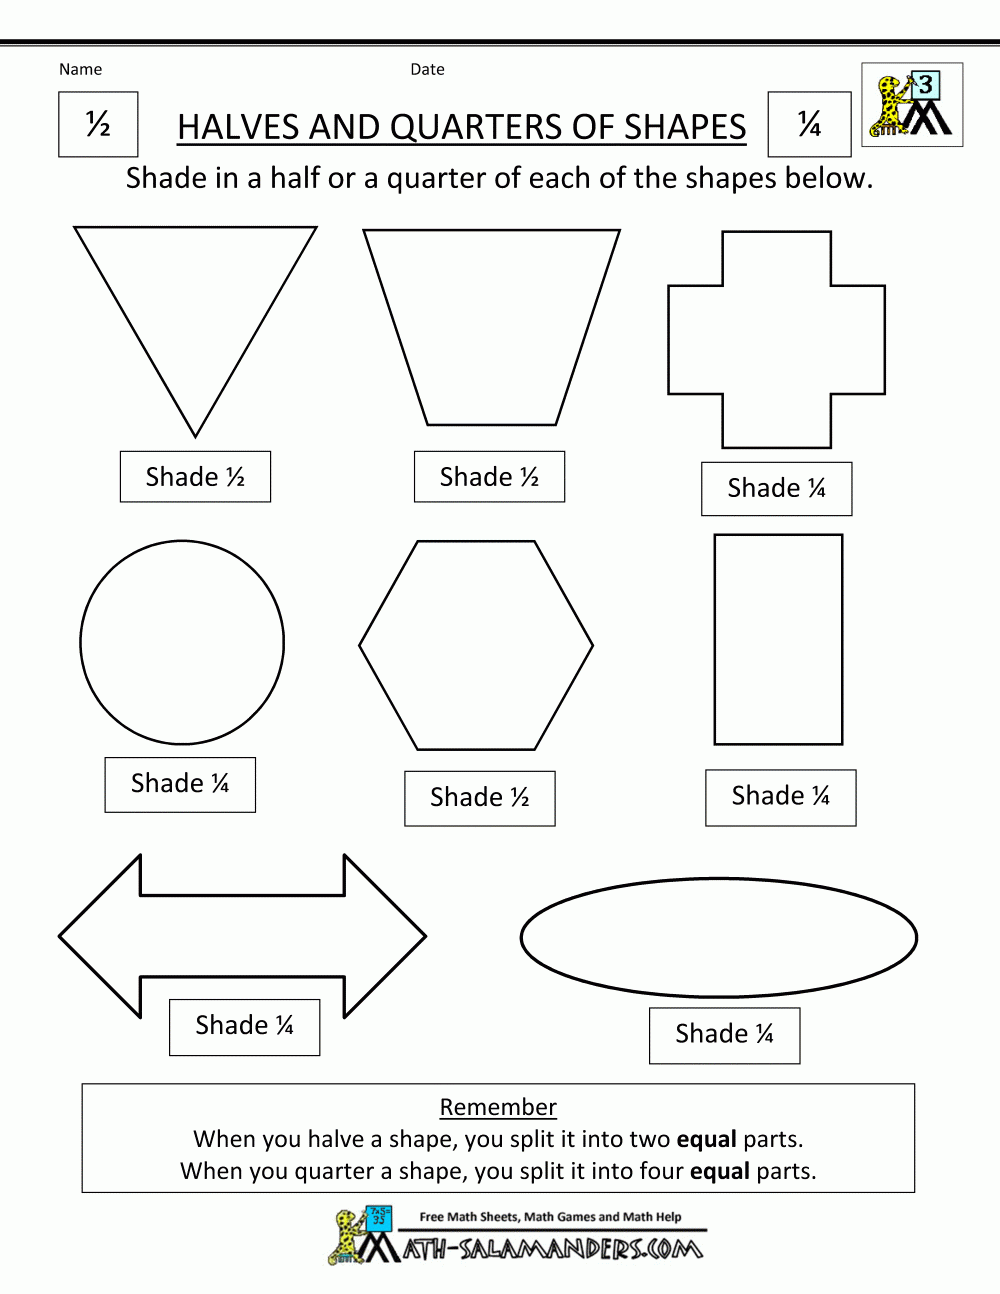 Fractions Of Shapes Worksheets